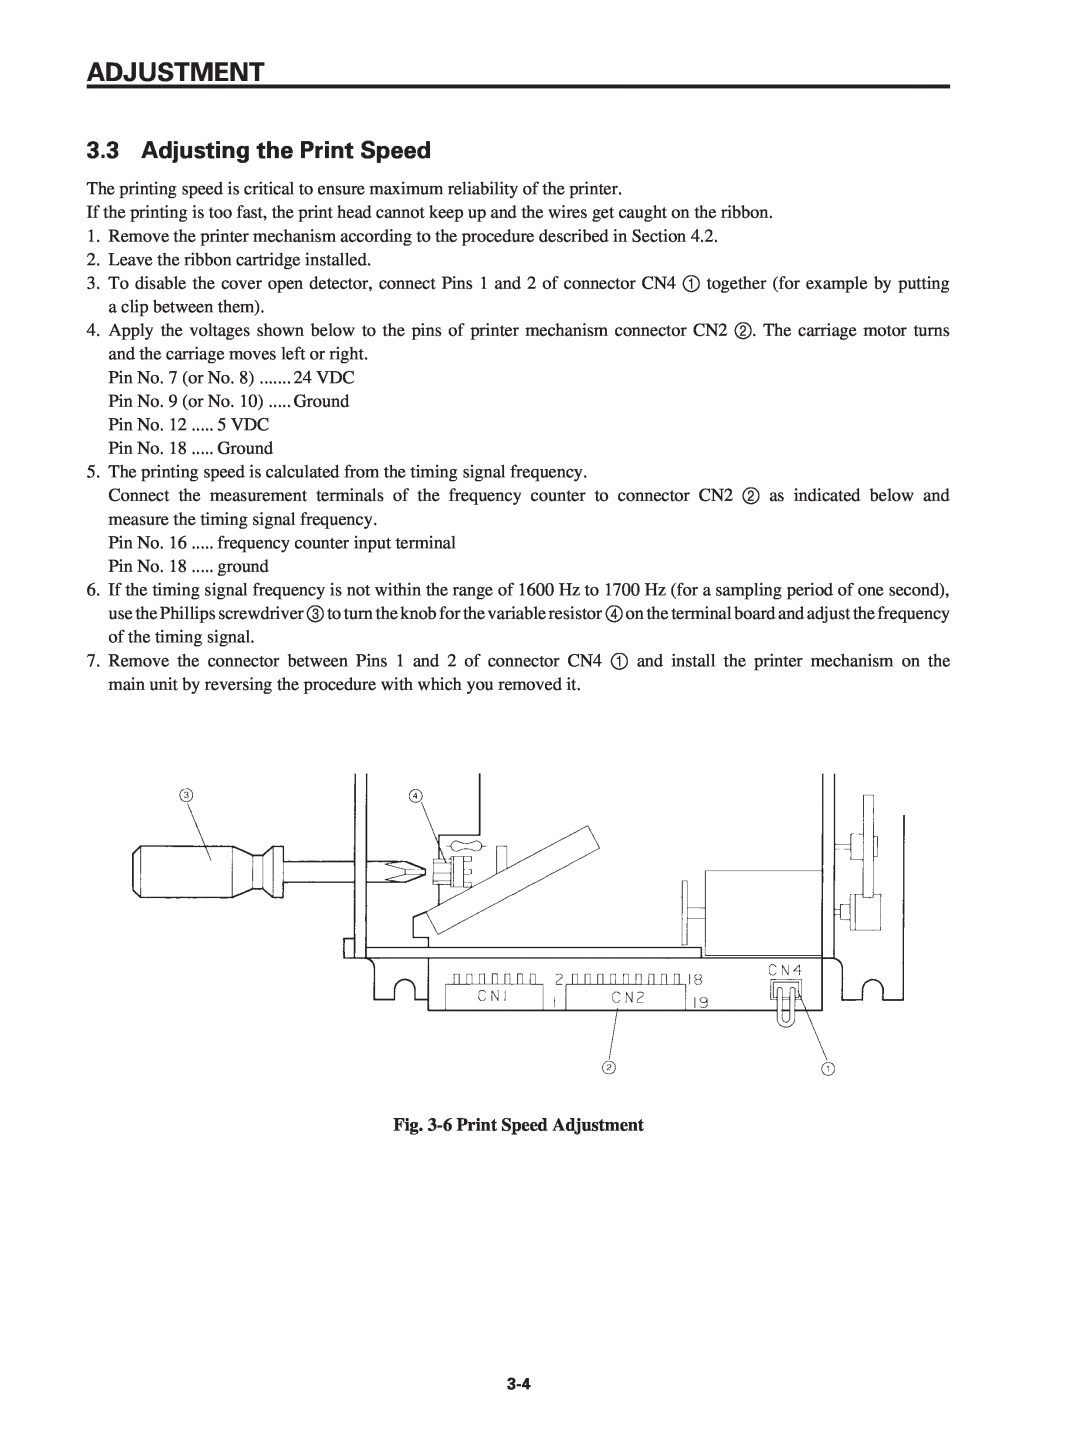 Star Micronics SP320S technical manual Adjusting the Print Speed, 6 Print Speed Adjustment 